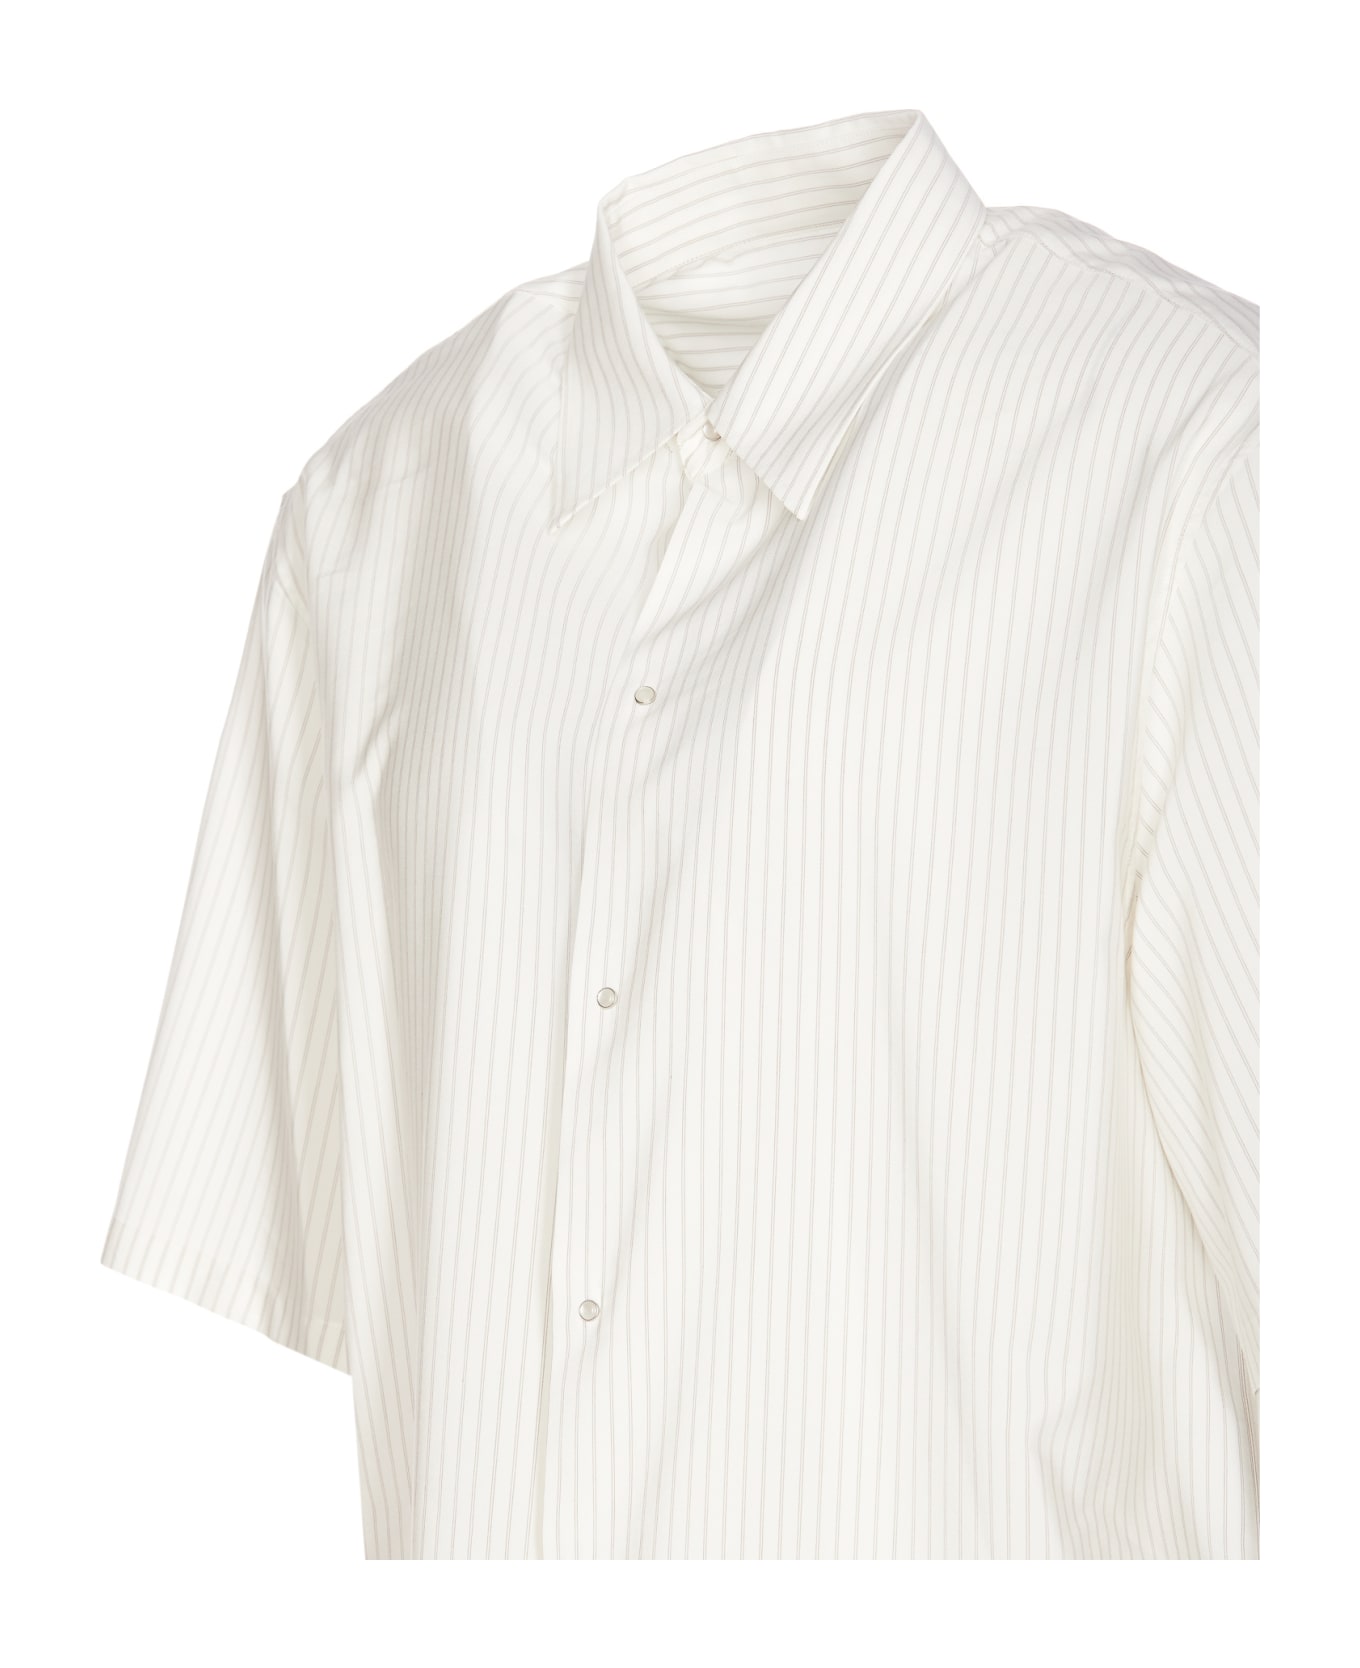 Lanvin Shirt - White シャツ